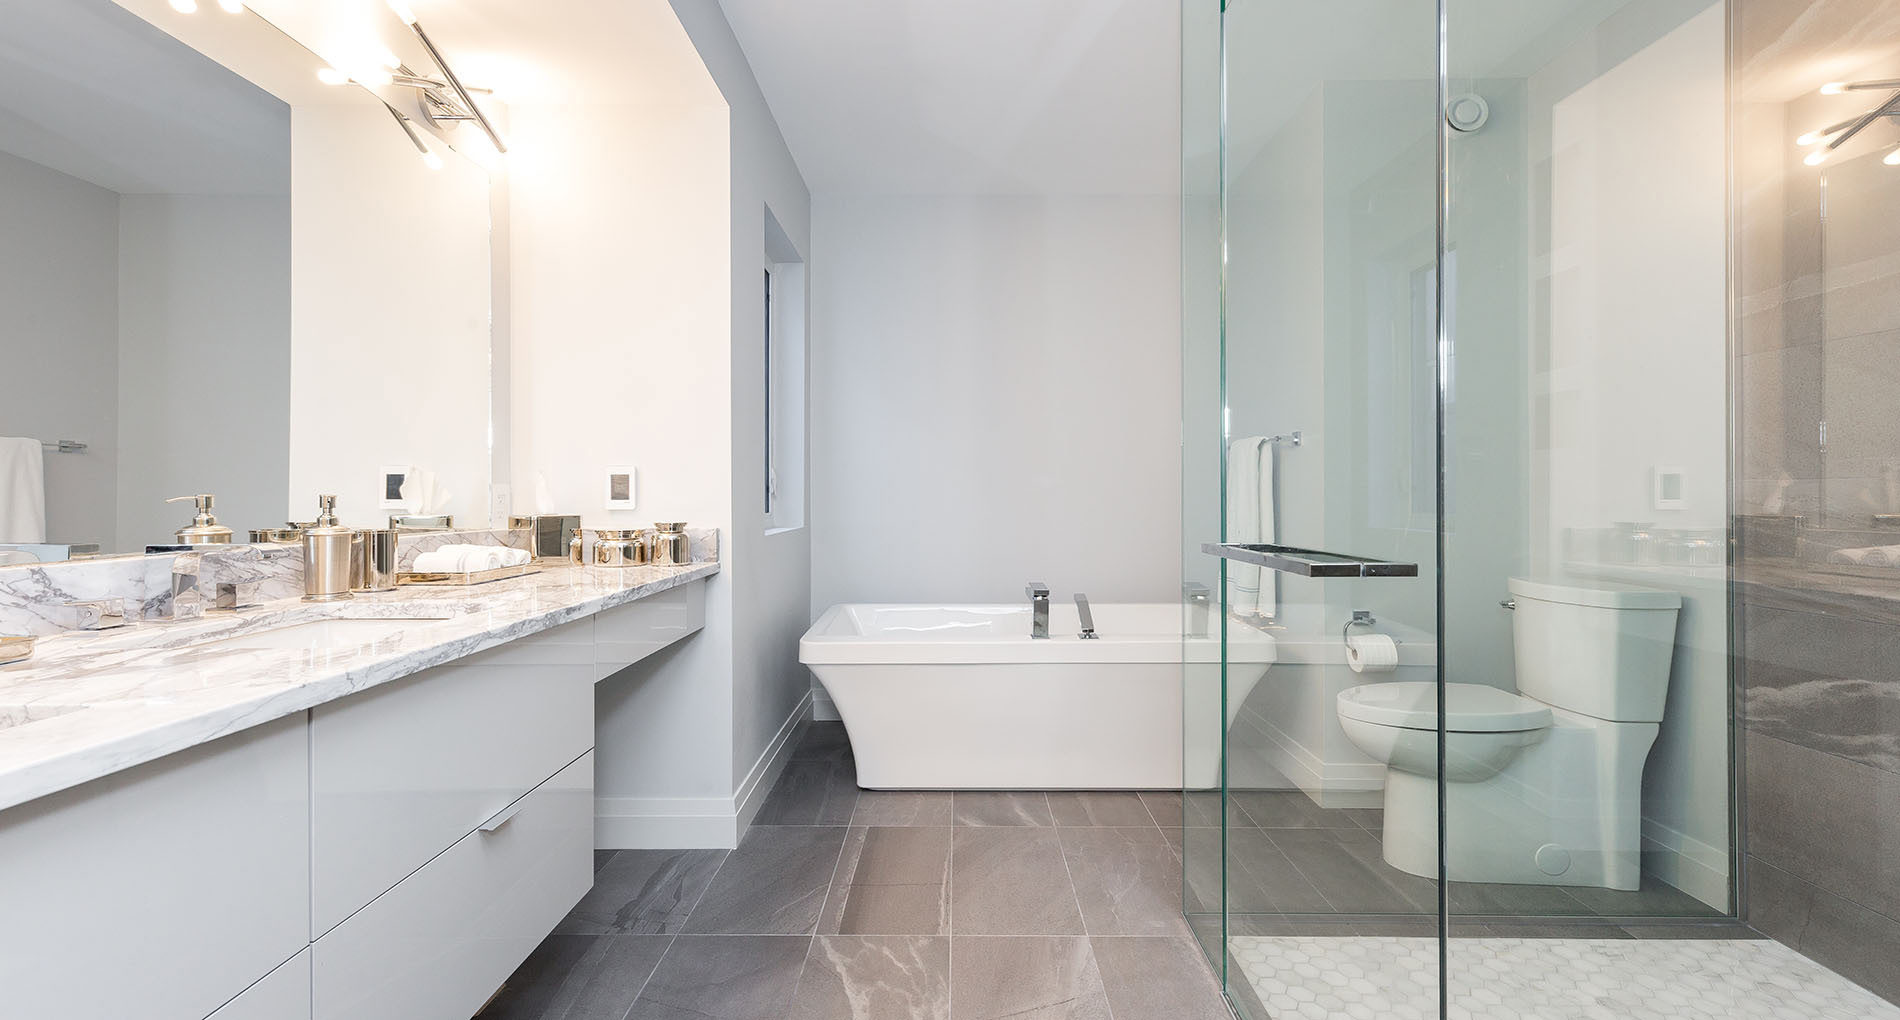 bathroom renovations calgary cost